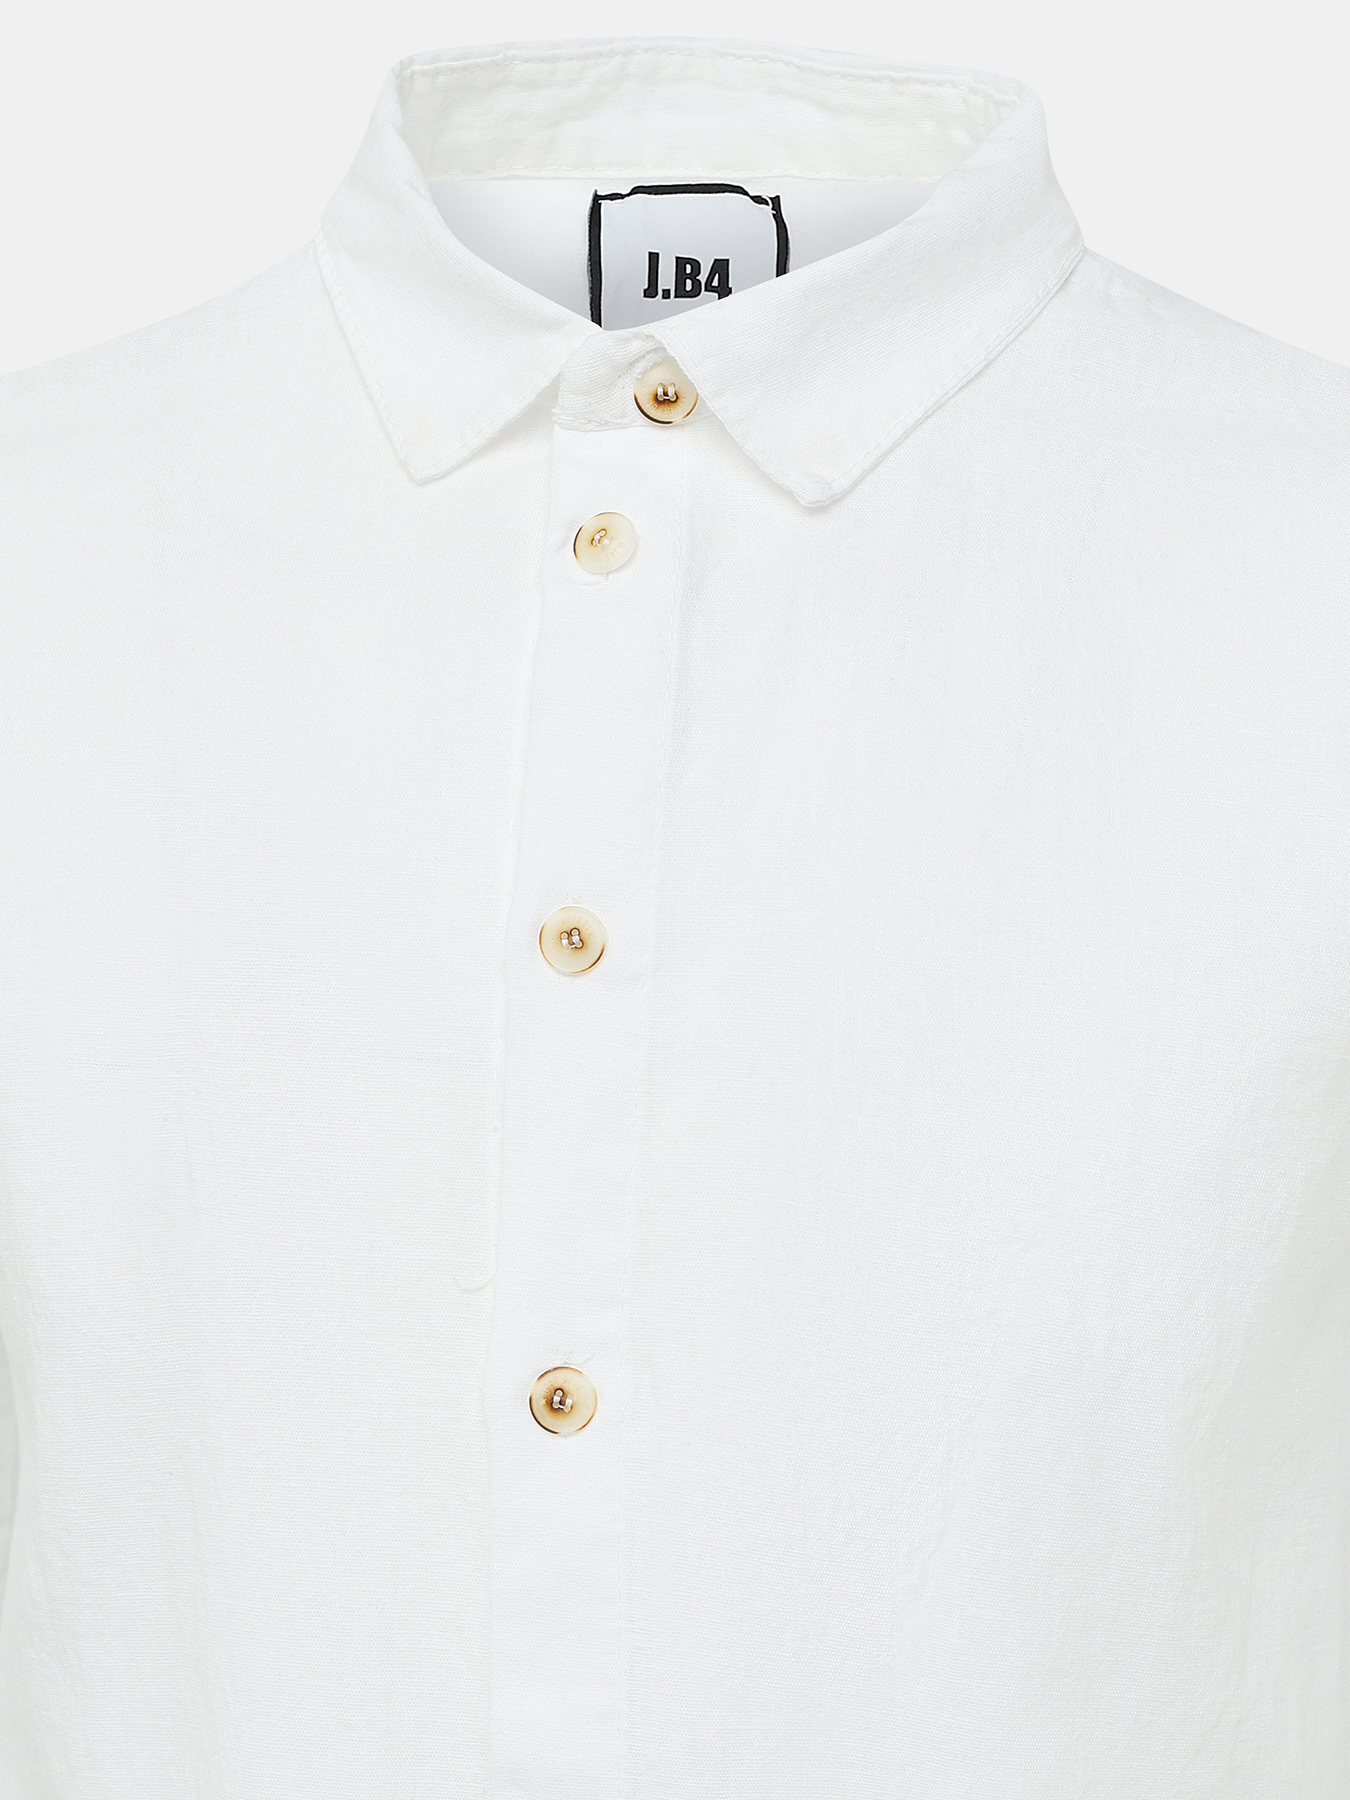 Рубашка J.B4 434628-042, цвет белый, размер 46 - фото 3